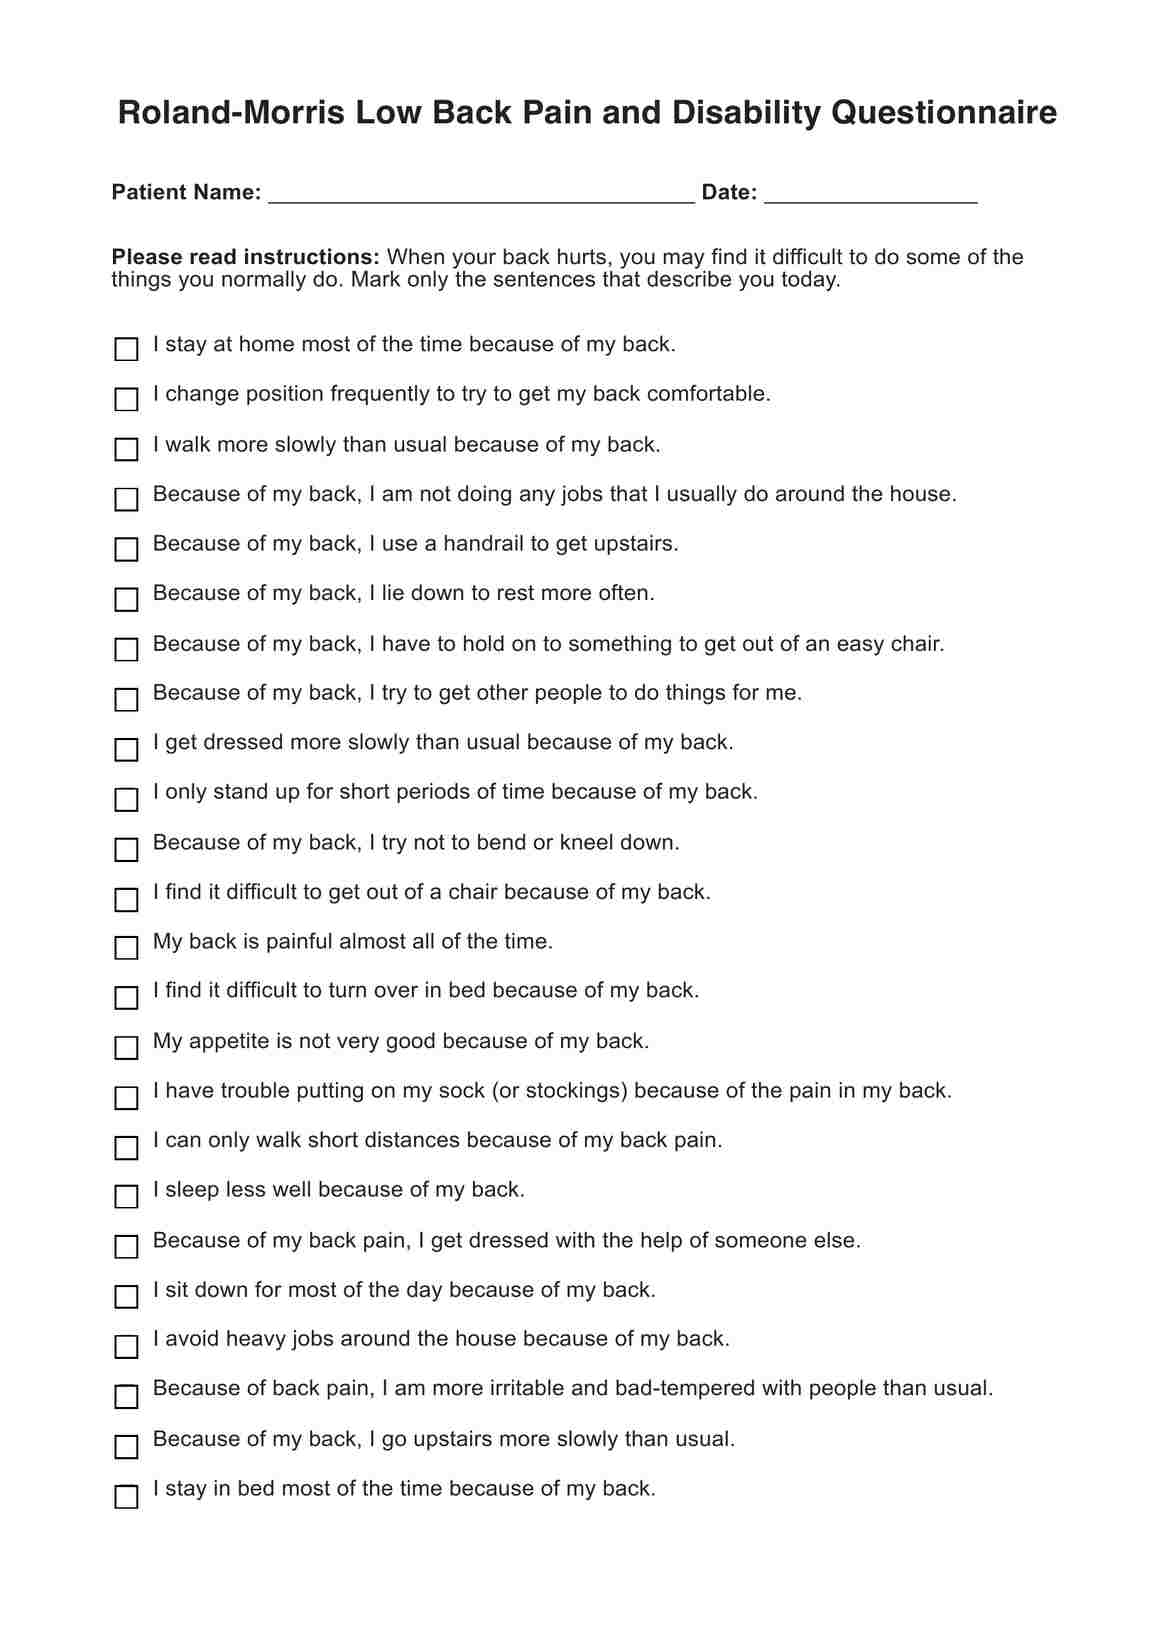 Roland Morris Disability Questionnaires PDF Example